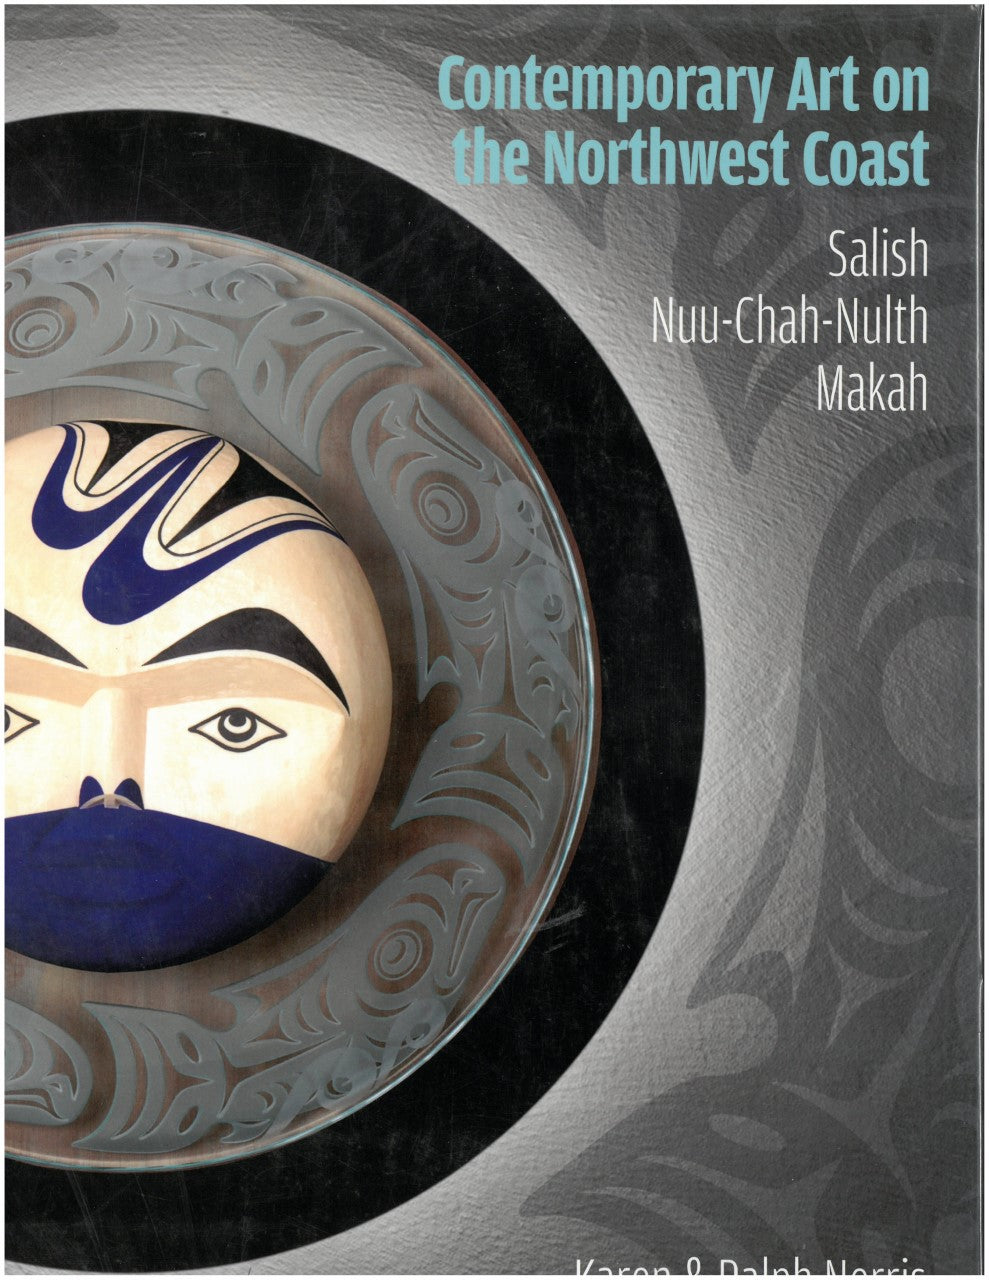 Contemporary Art on the Northwest Coast: Salish, Nuu-Chah-Nulth, Makah by Karen Norris